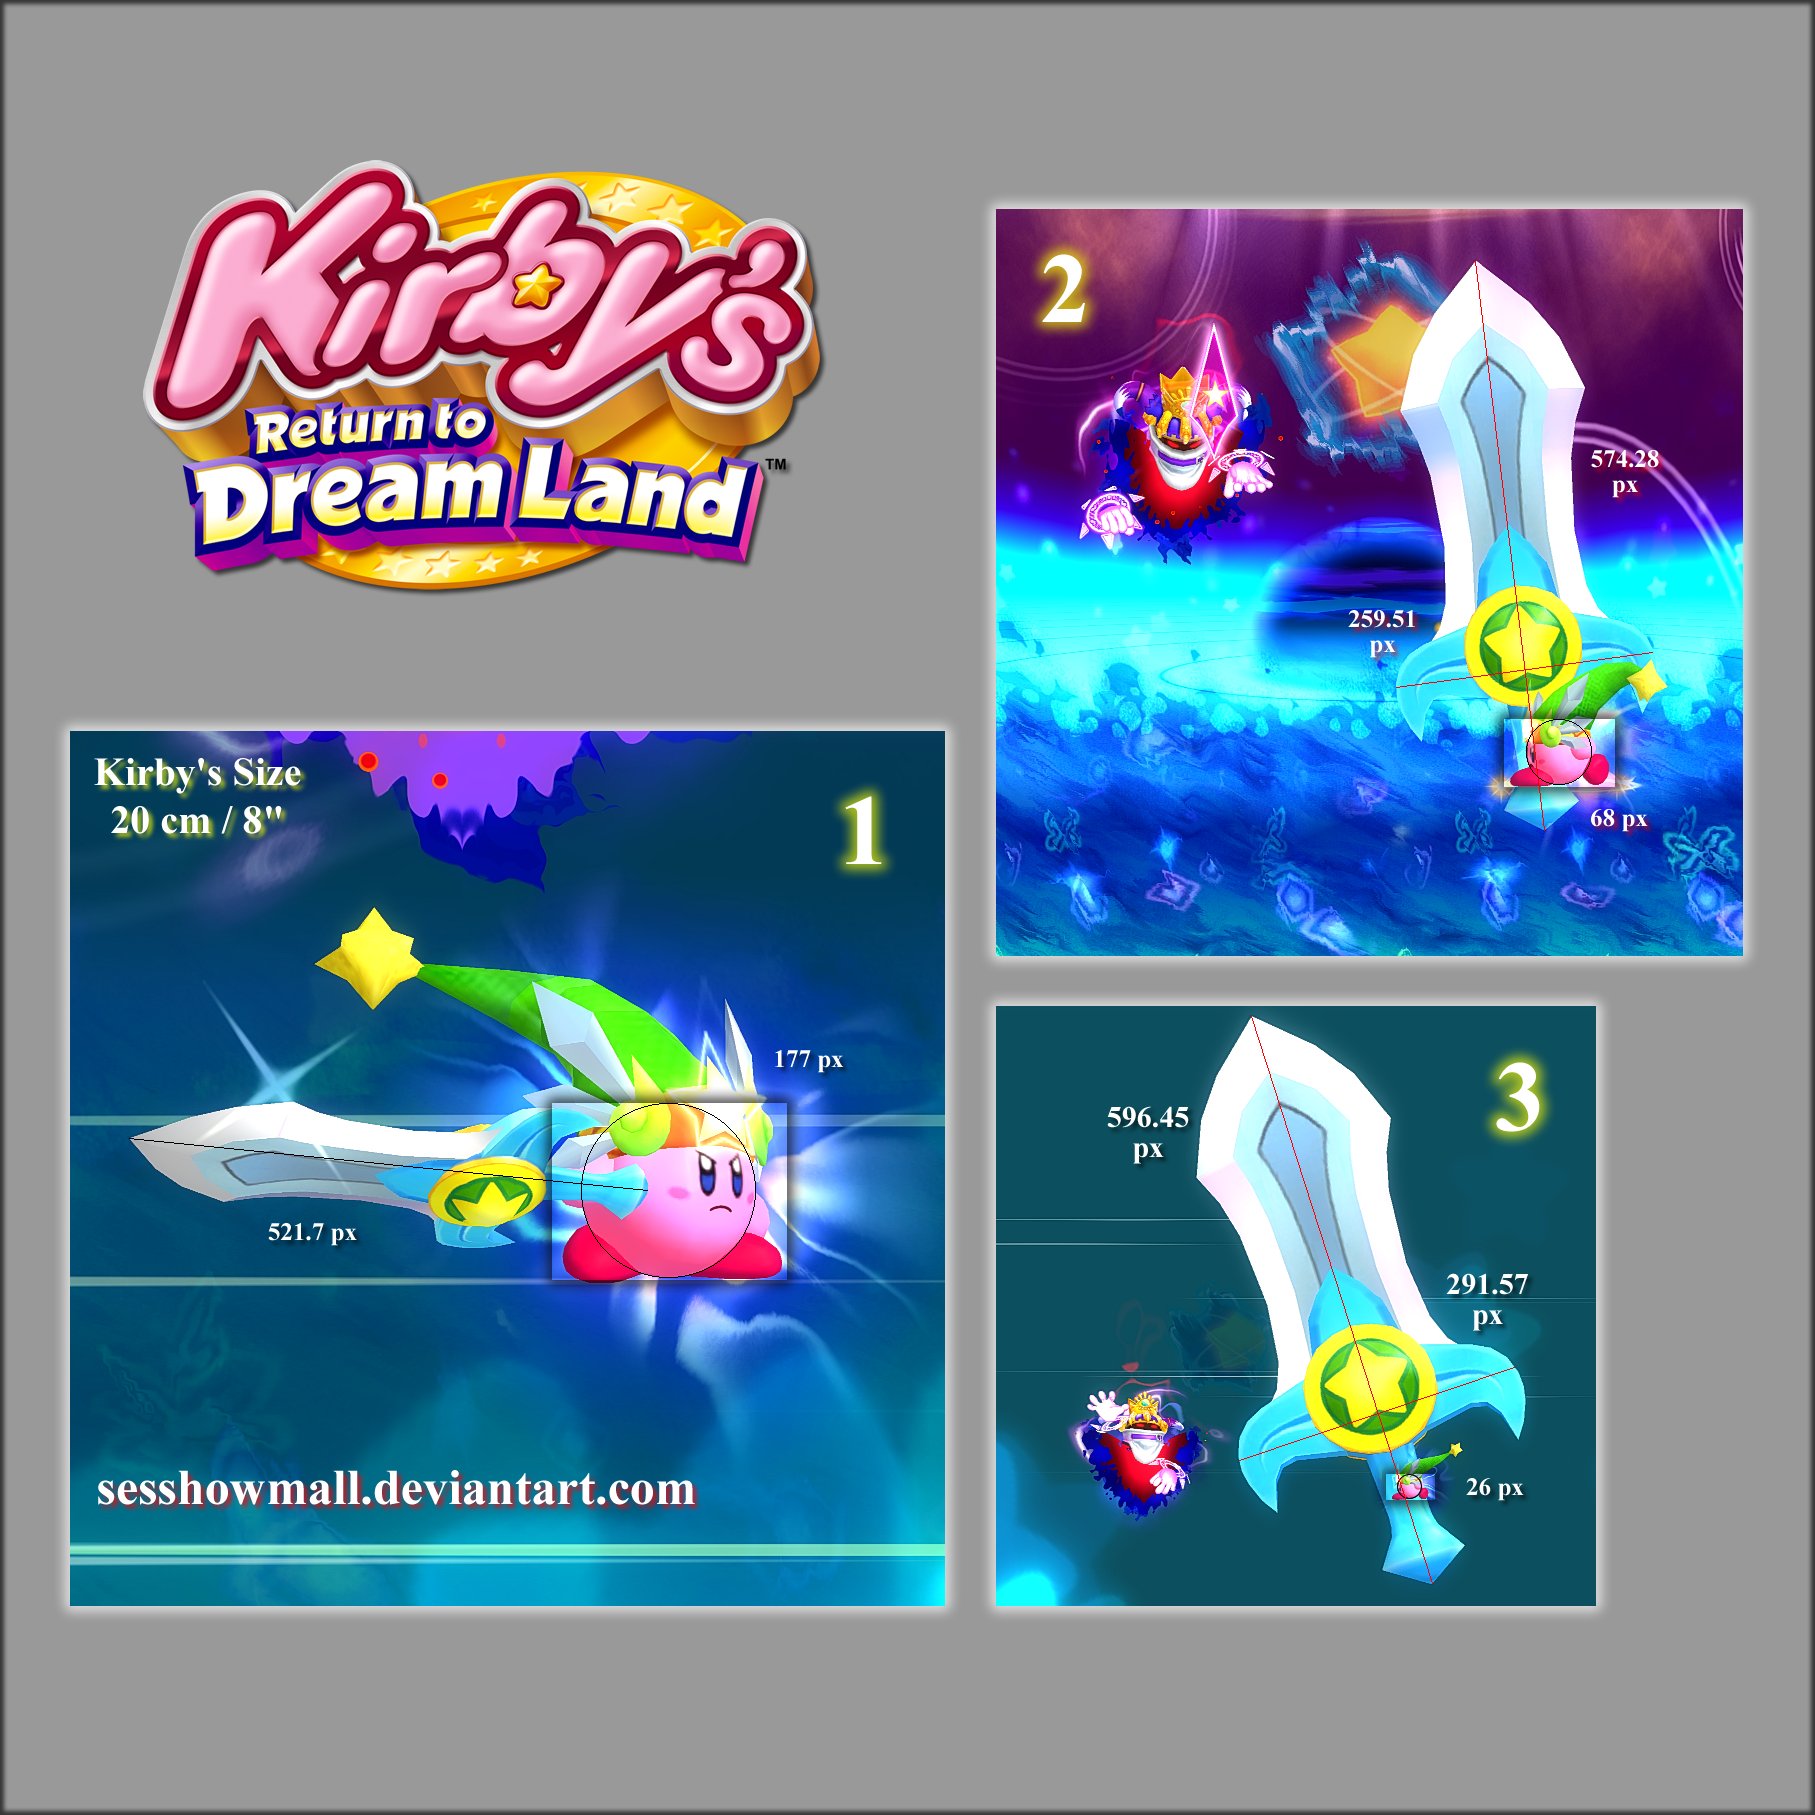 Kirby na sua forma Ultra Sword. Fonte